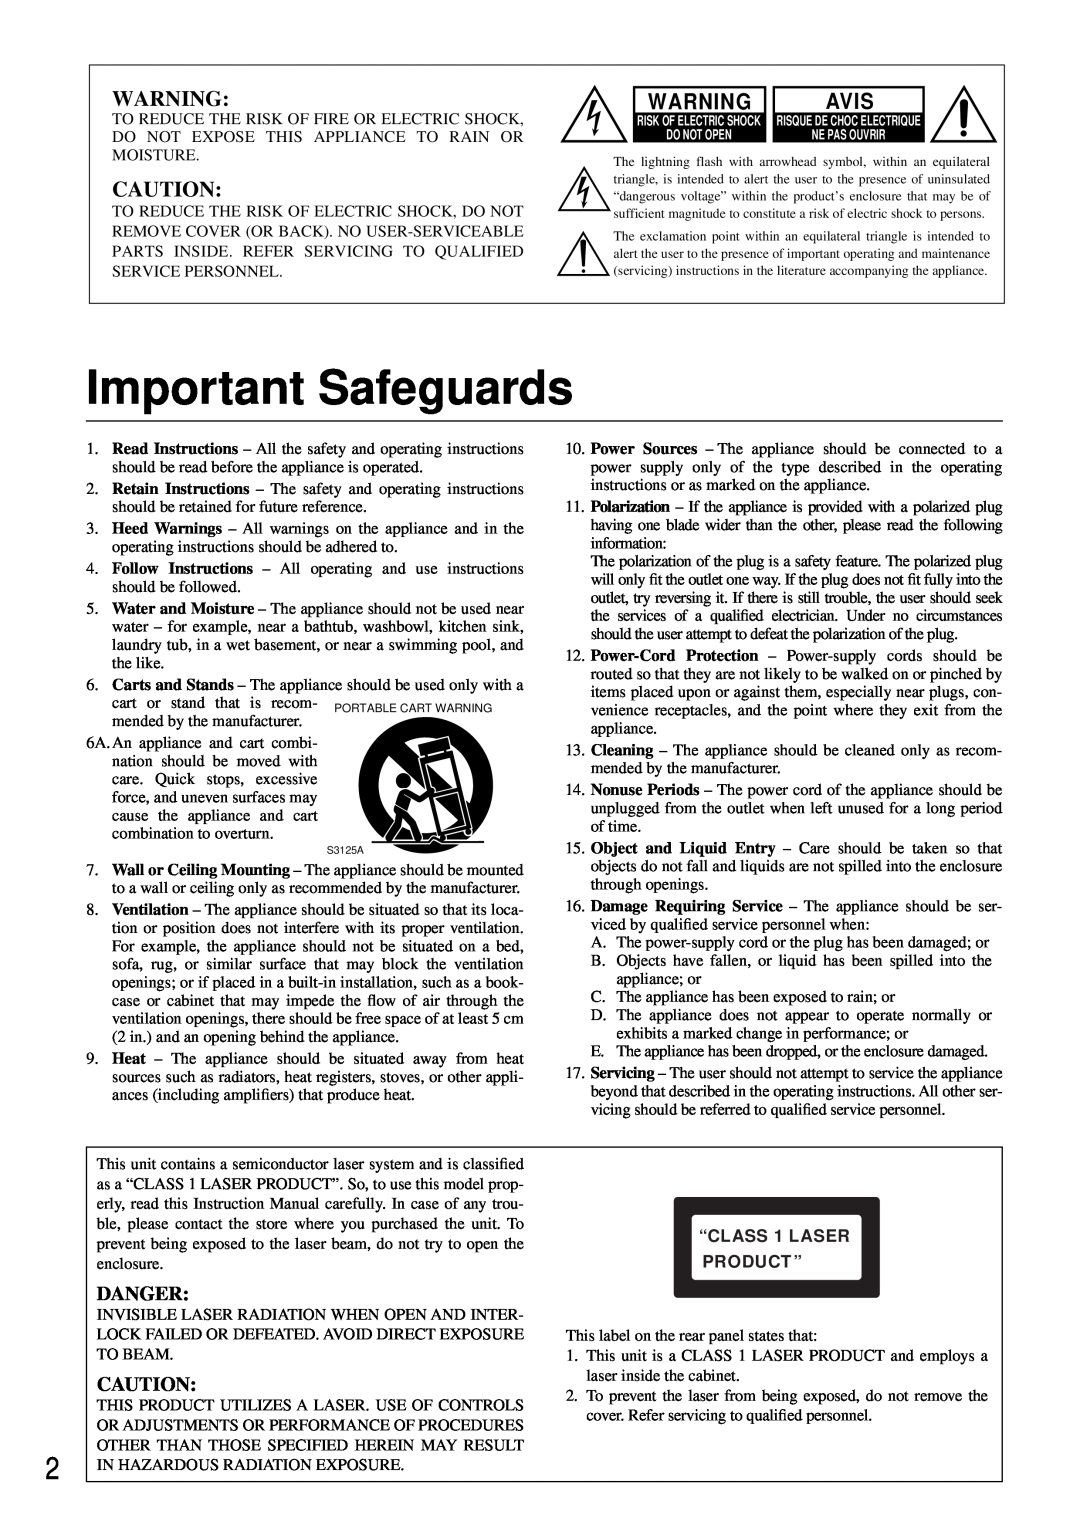 Onkyo DX-C370 instruction manual “CLASS 1 LASER, Product ”, Important Safeguards, Avis, Danger 